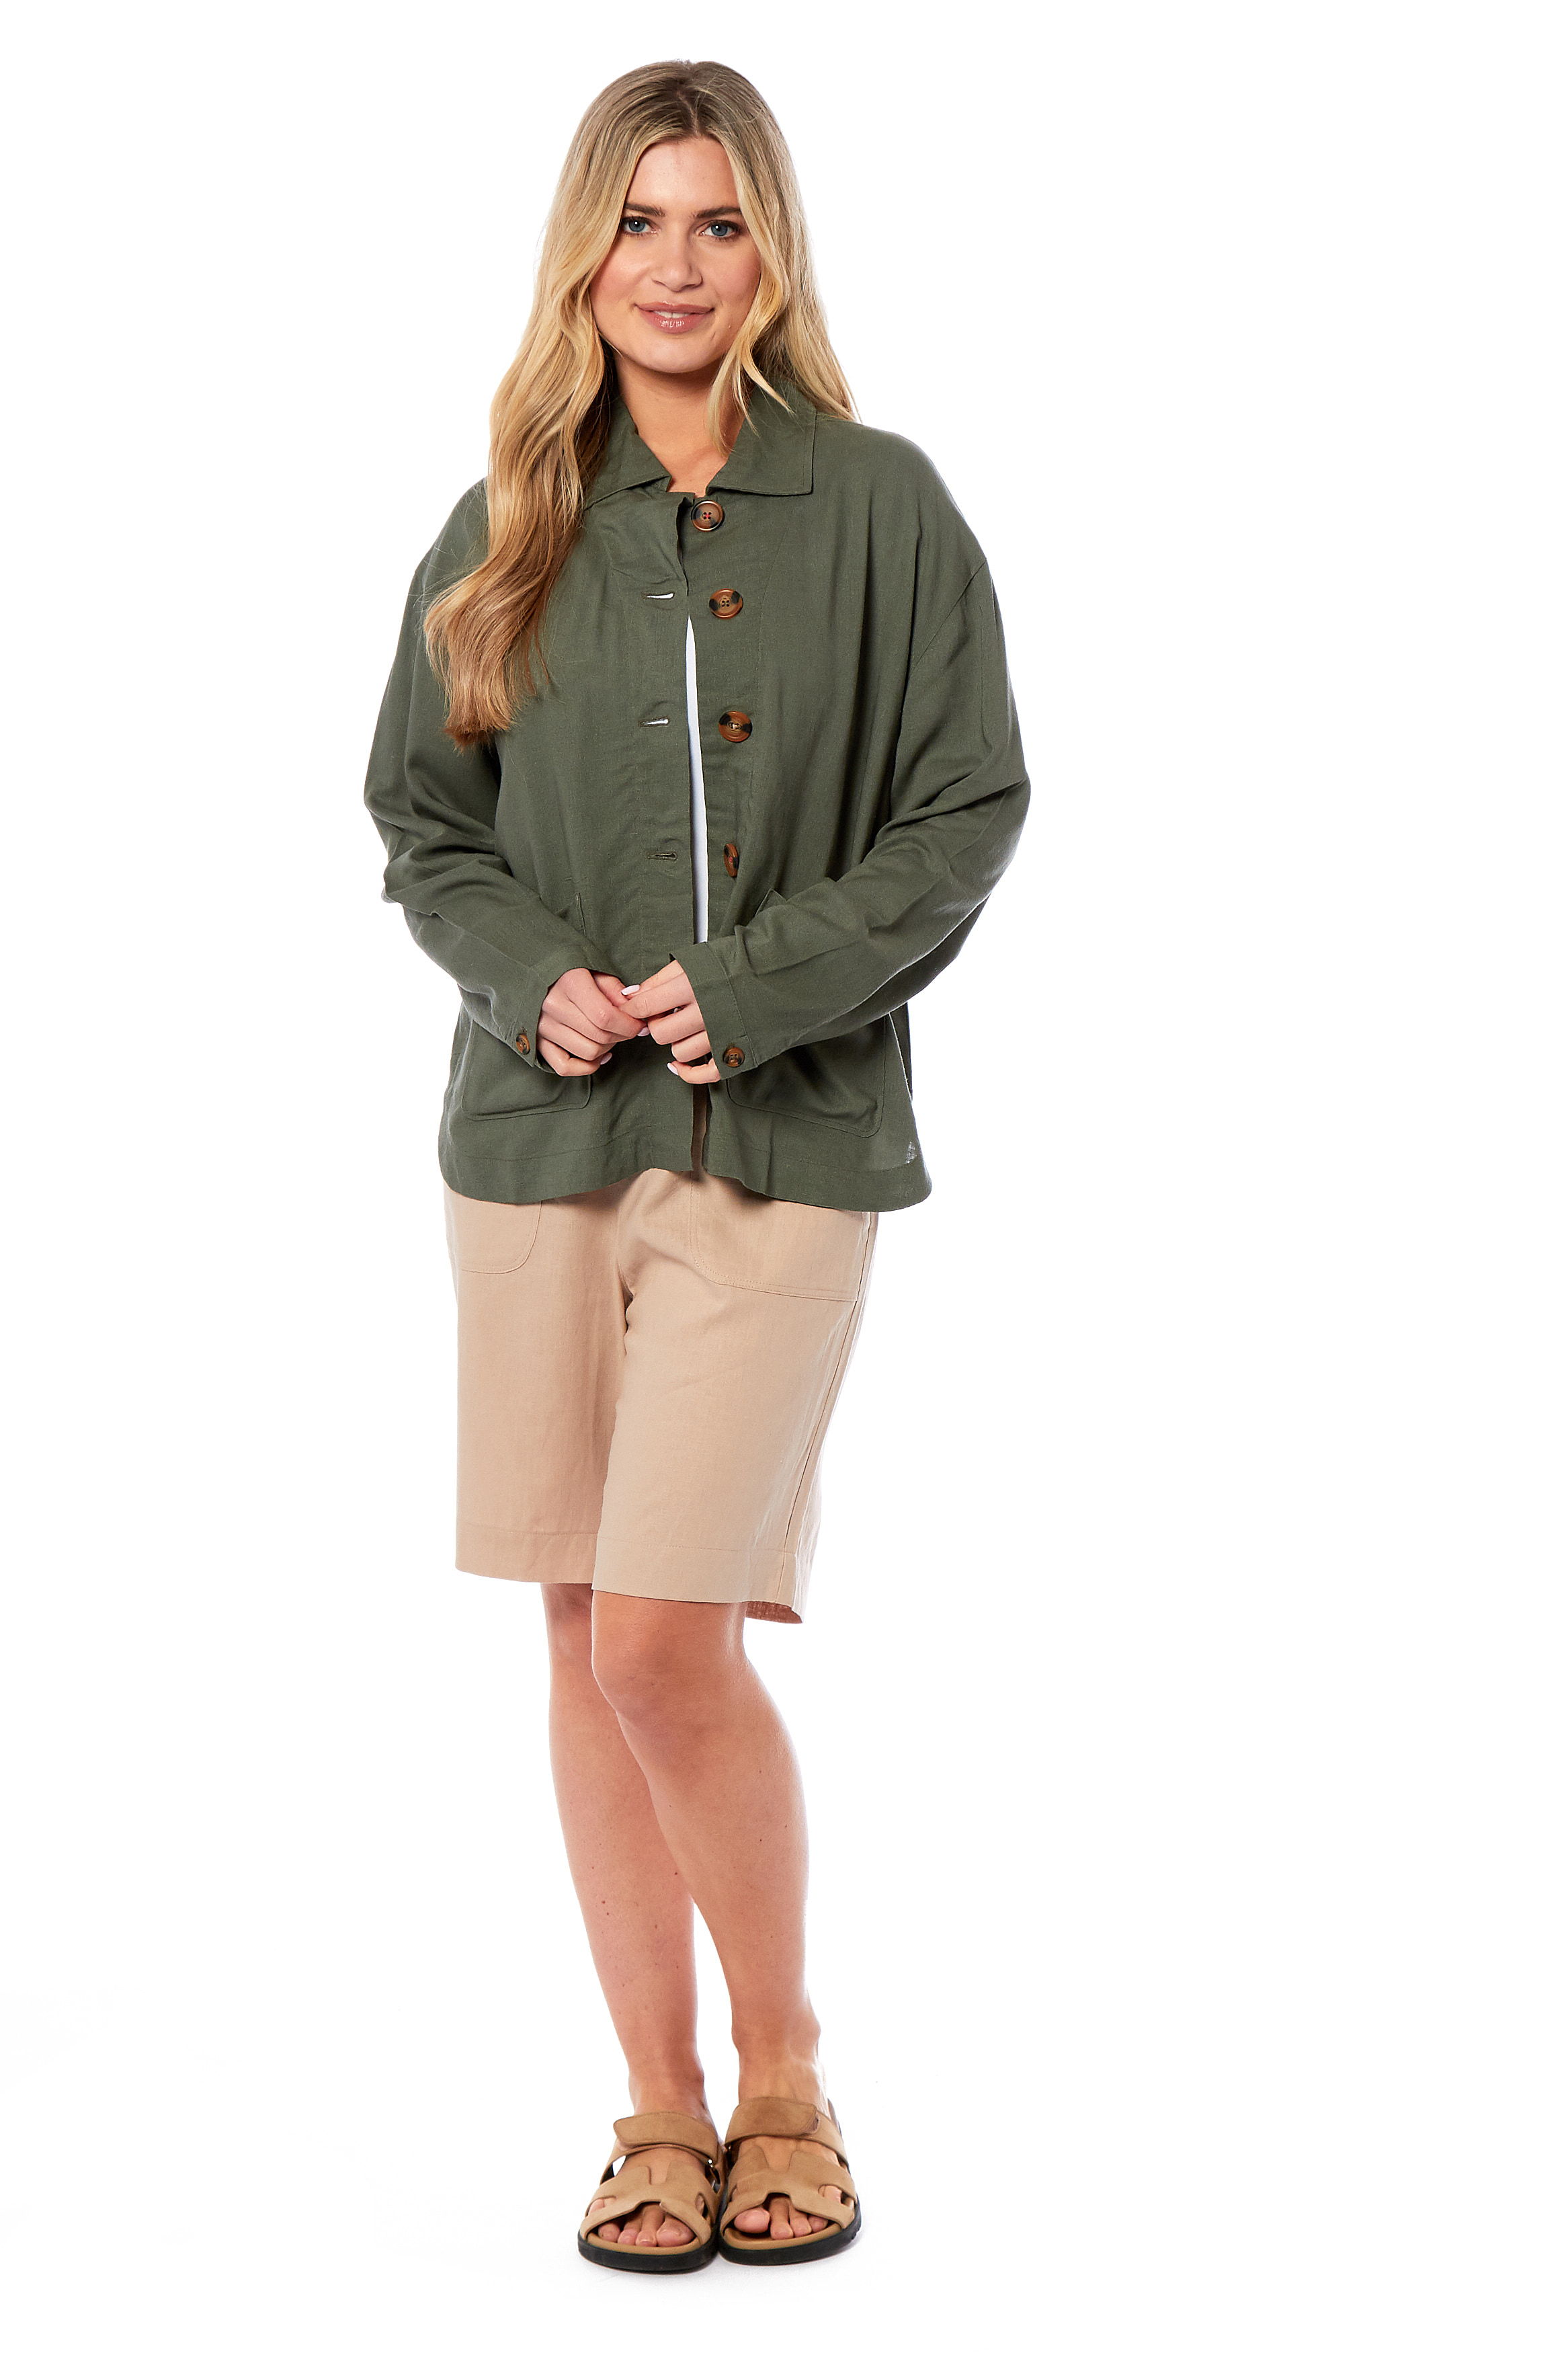 Charlotte West Ladies Linen Jacket (Size 12) - Khaki